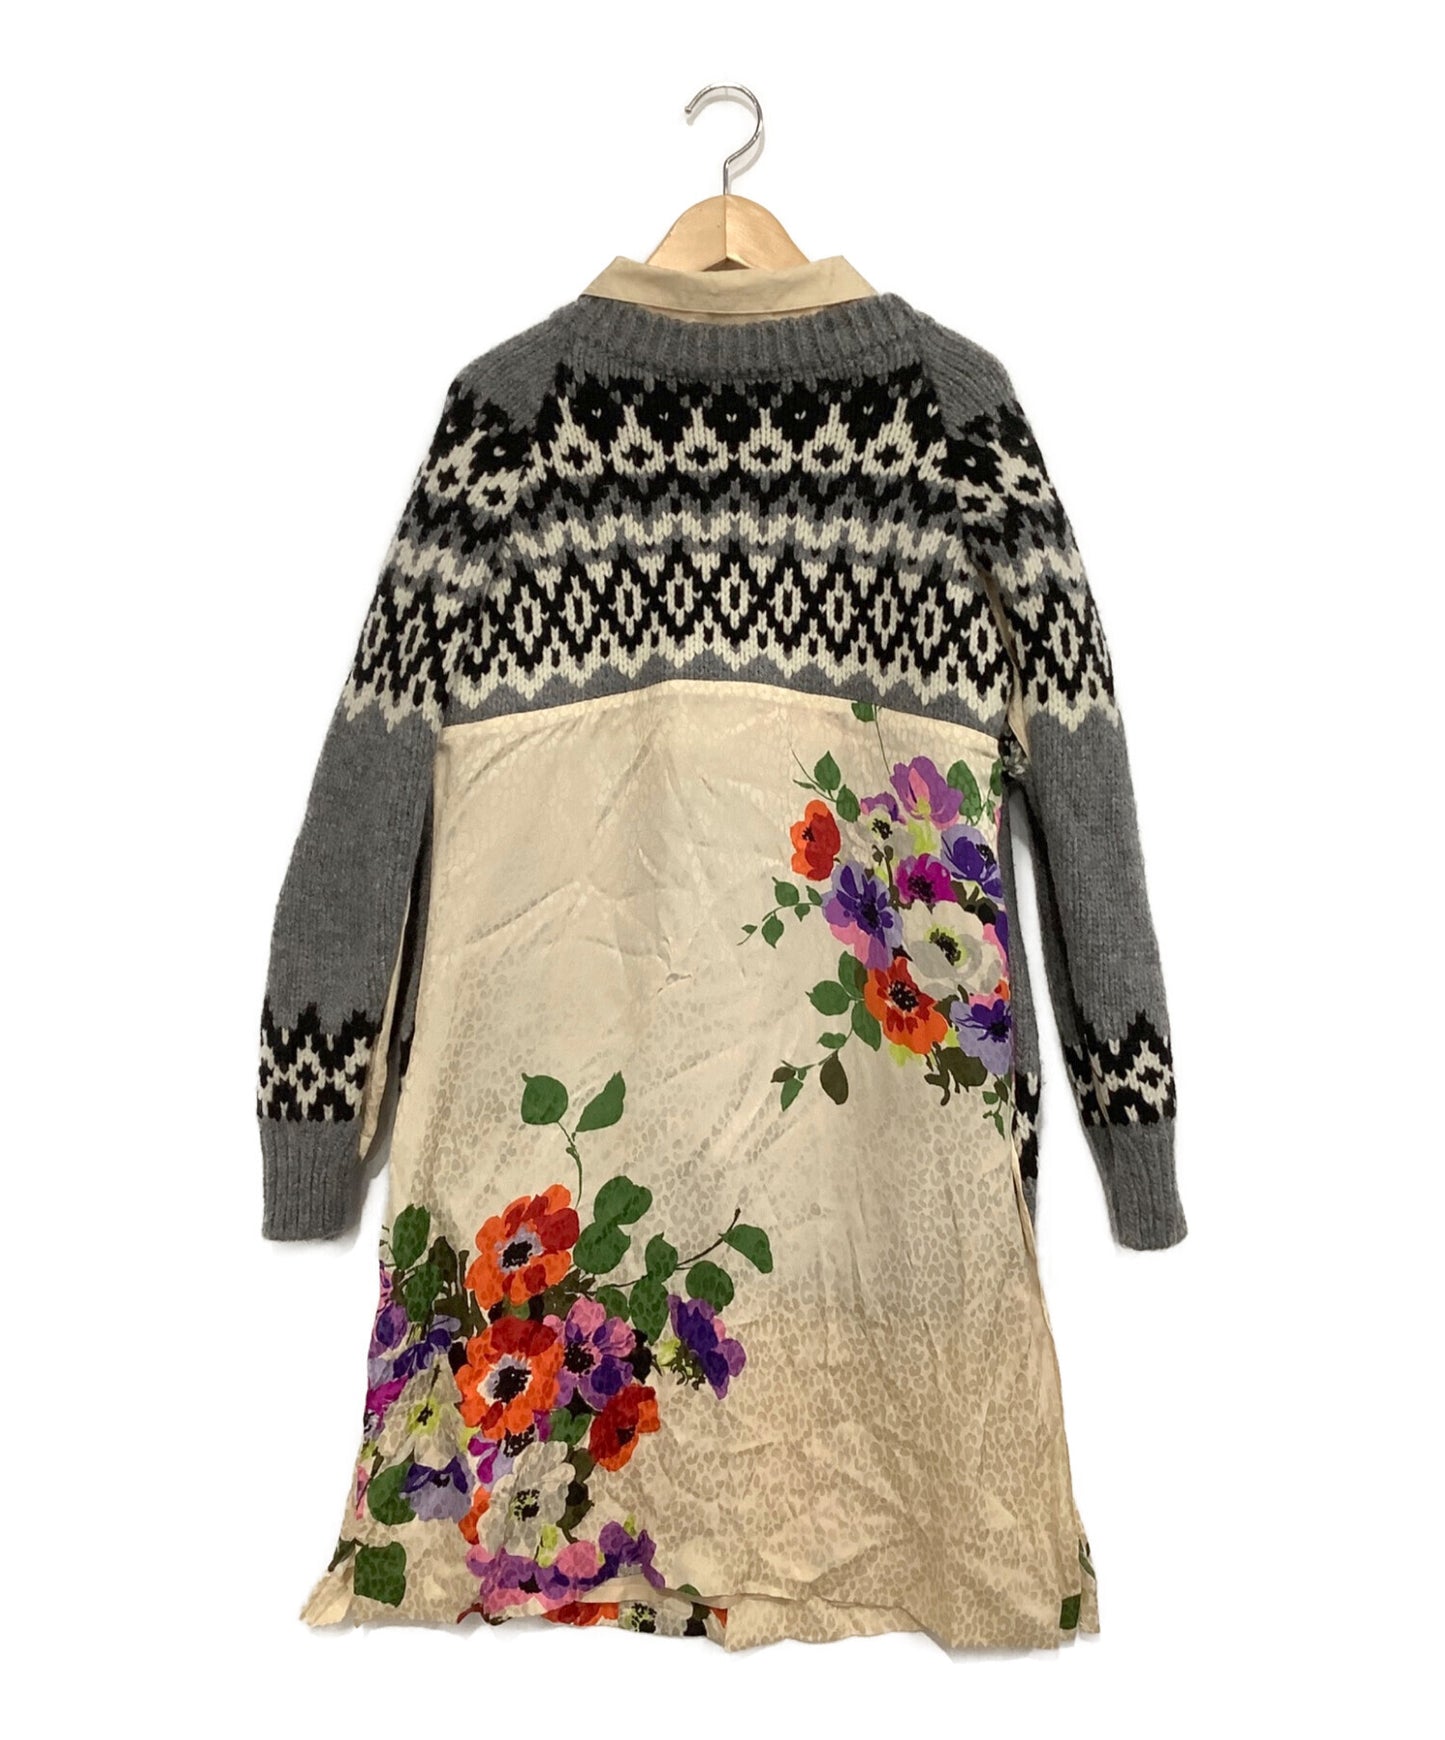 Junya Watanabe Comme des Garcons Wool Jacquard Cardigan Docking Floral Dress